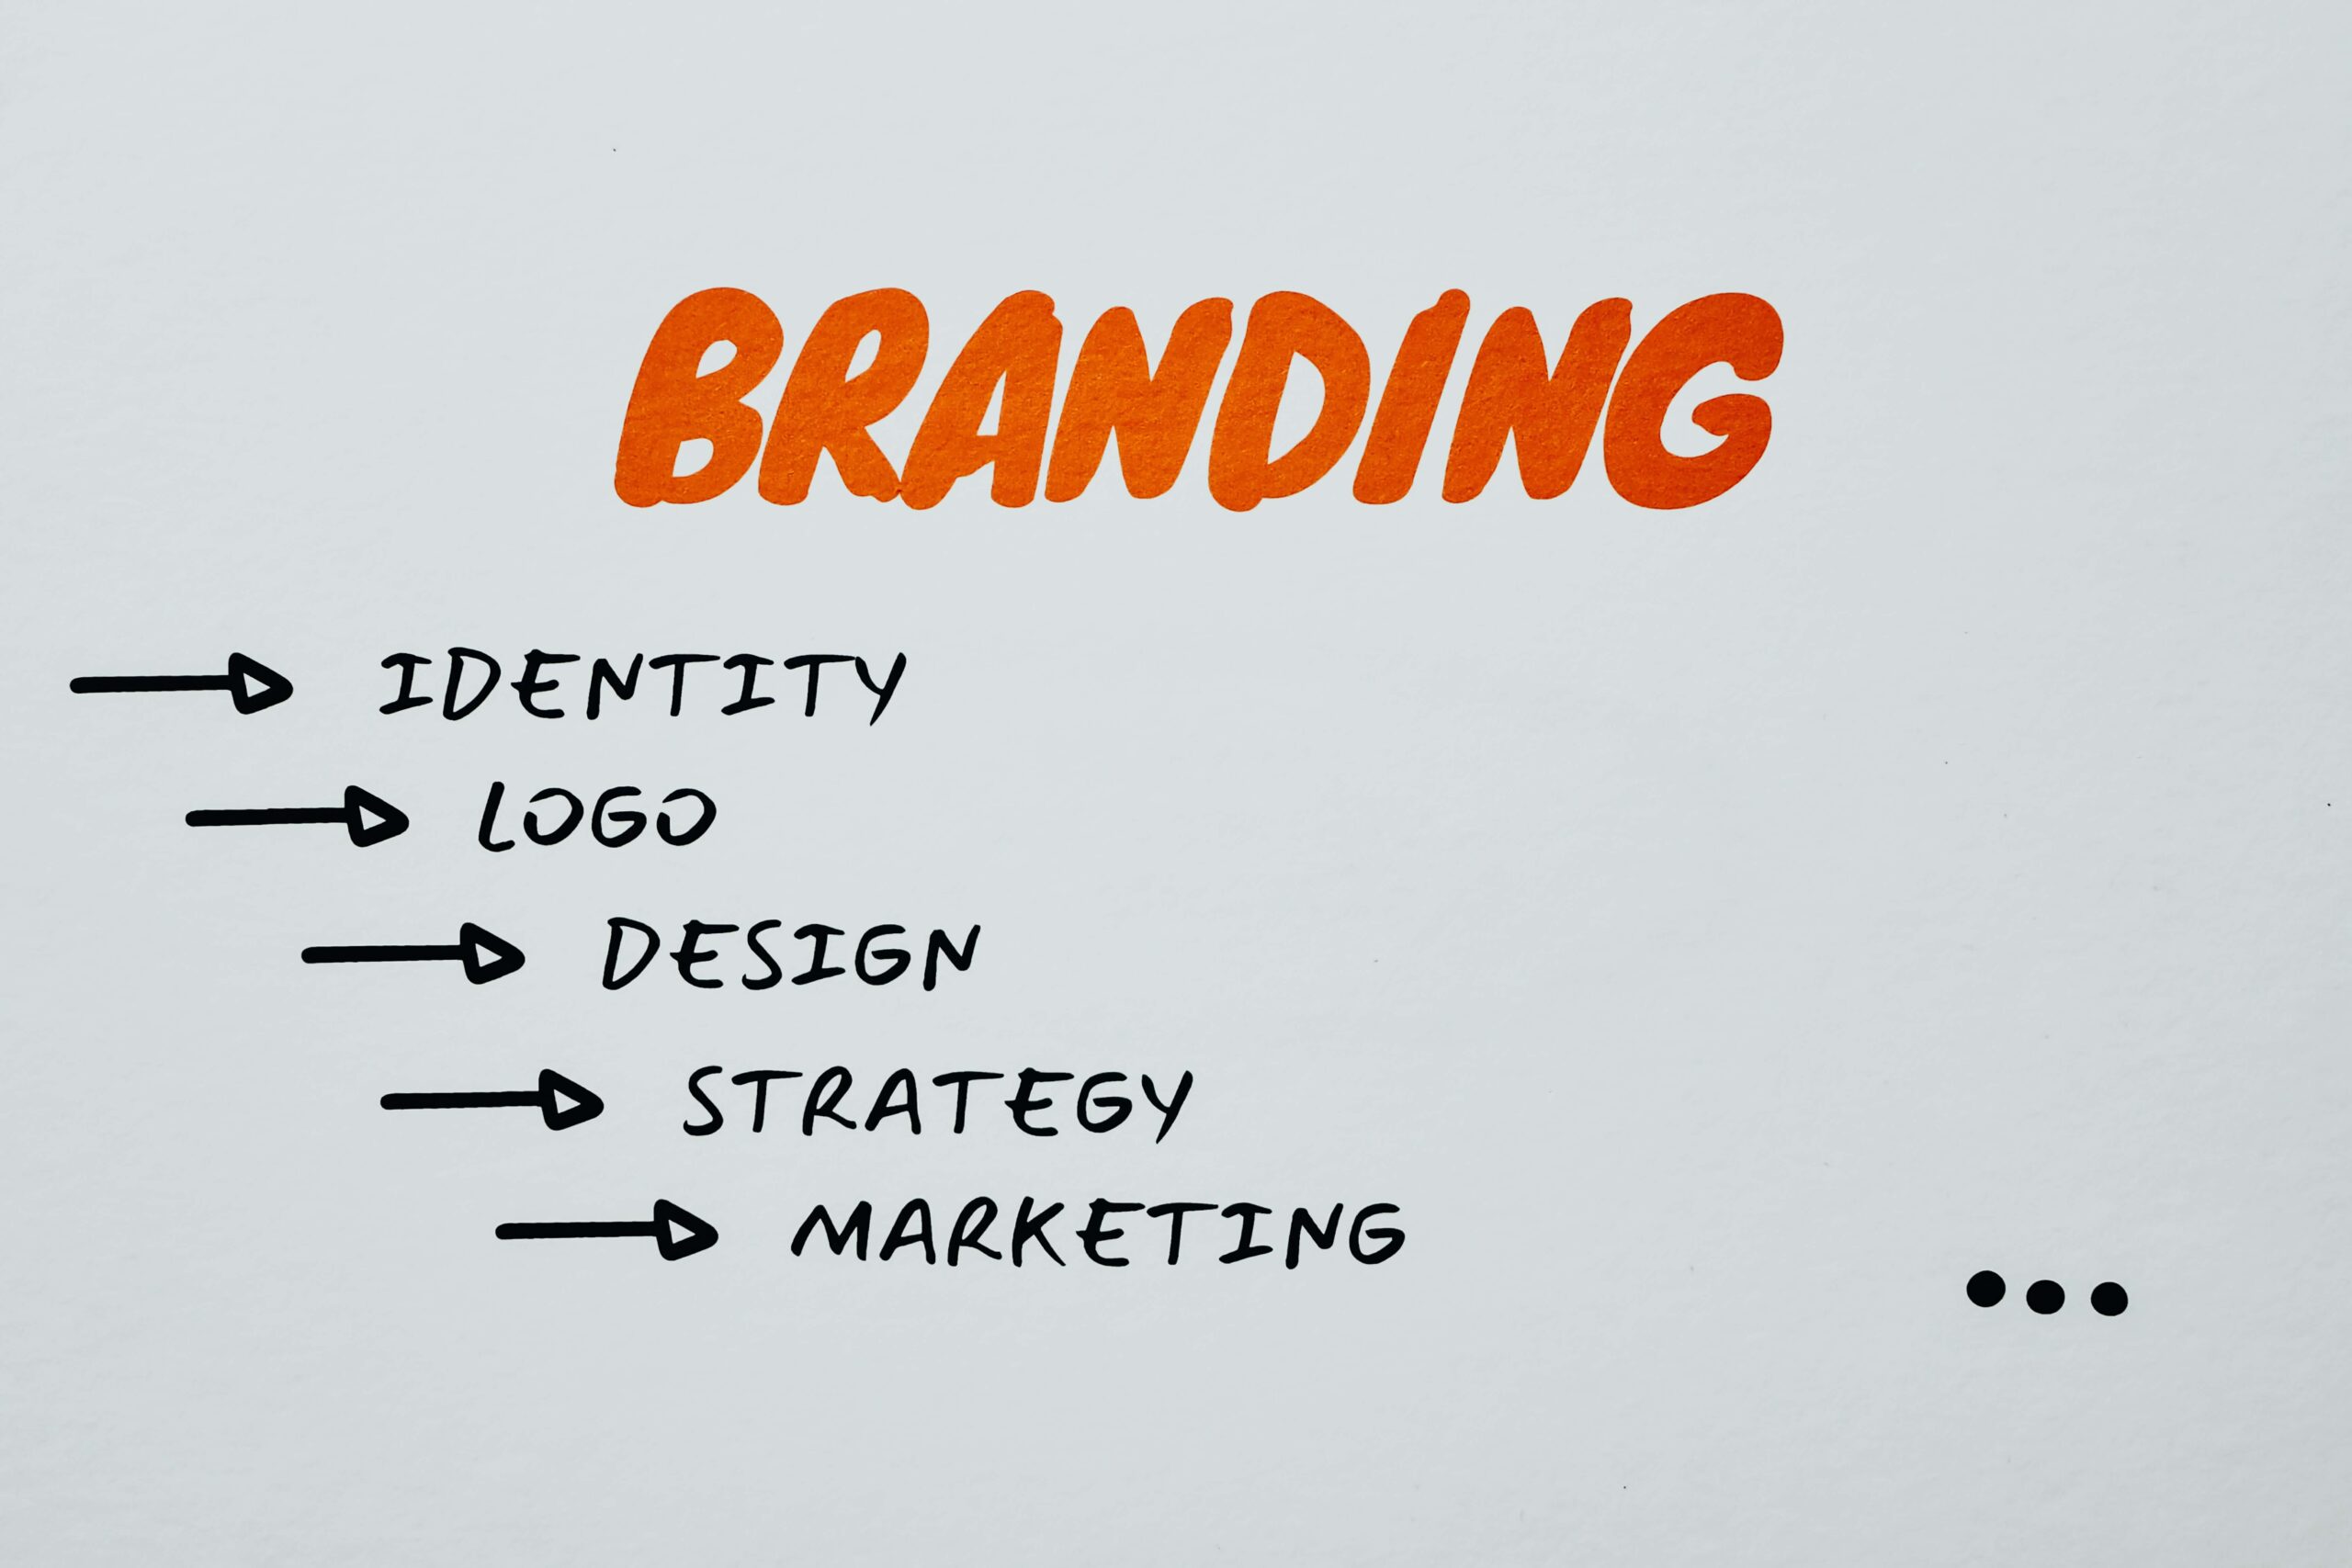 Branding services